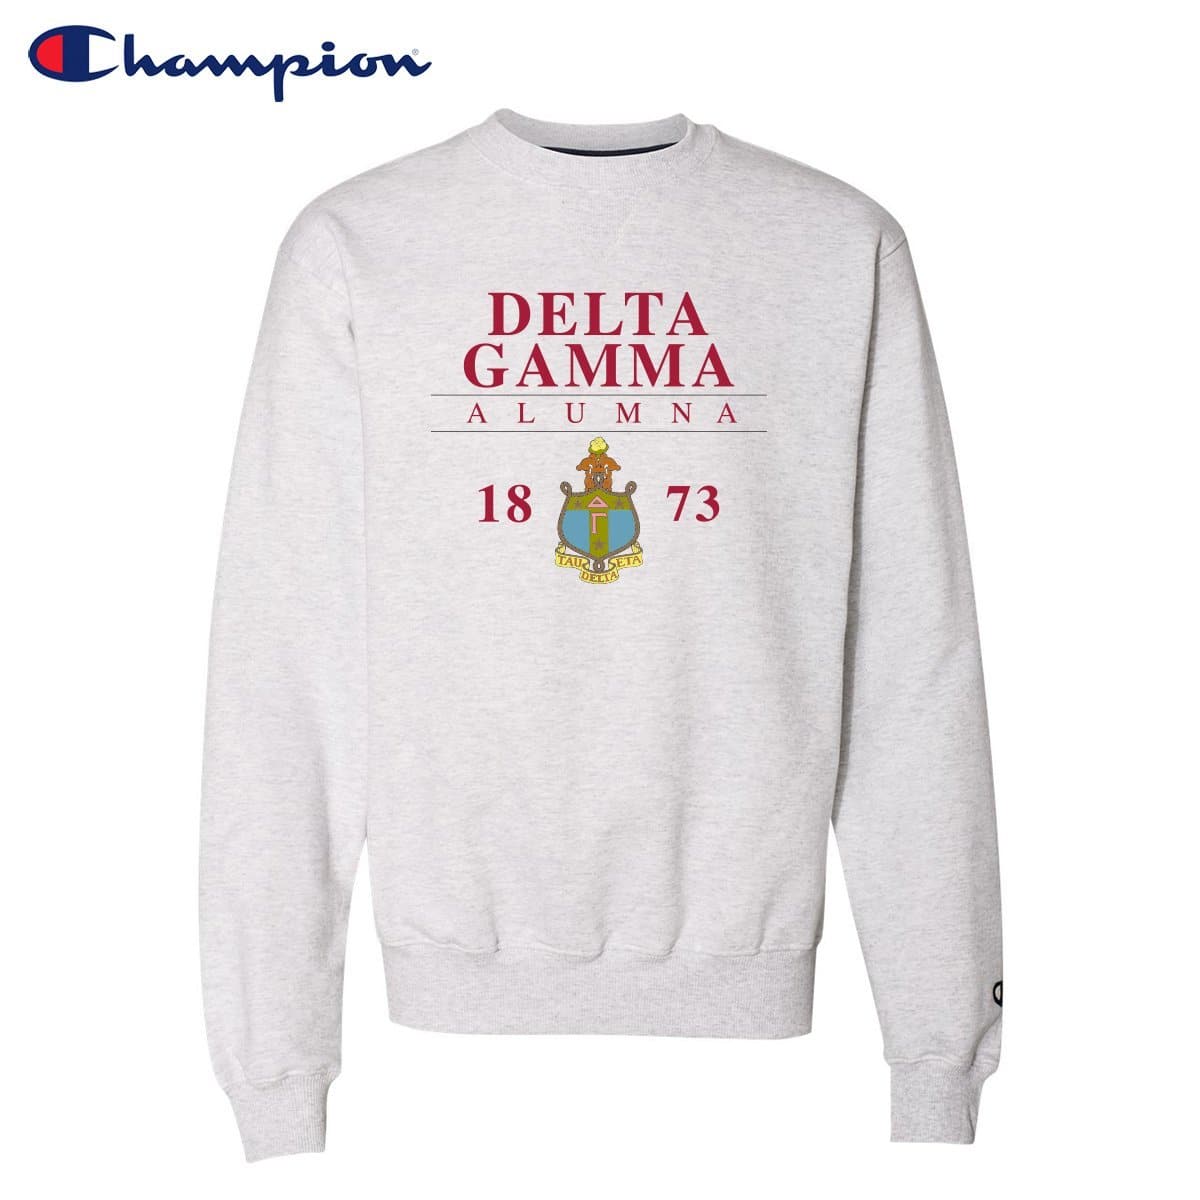 Delta Gamma Alumni Champion Sweatshirt | Delta Gamma | Sweatshirts > Crewneck sweatshirts